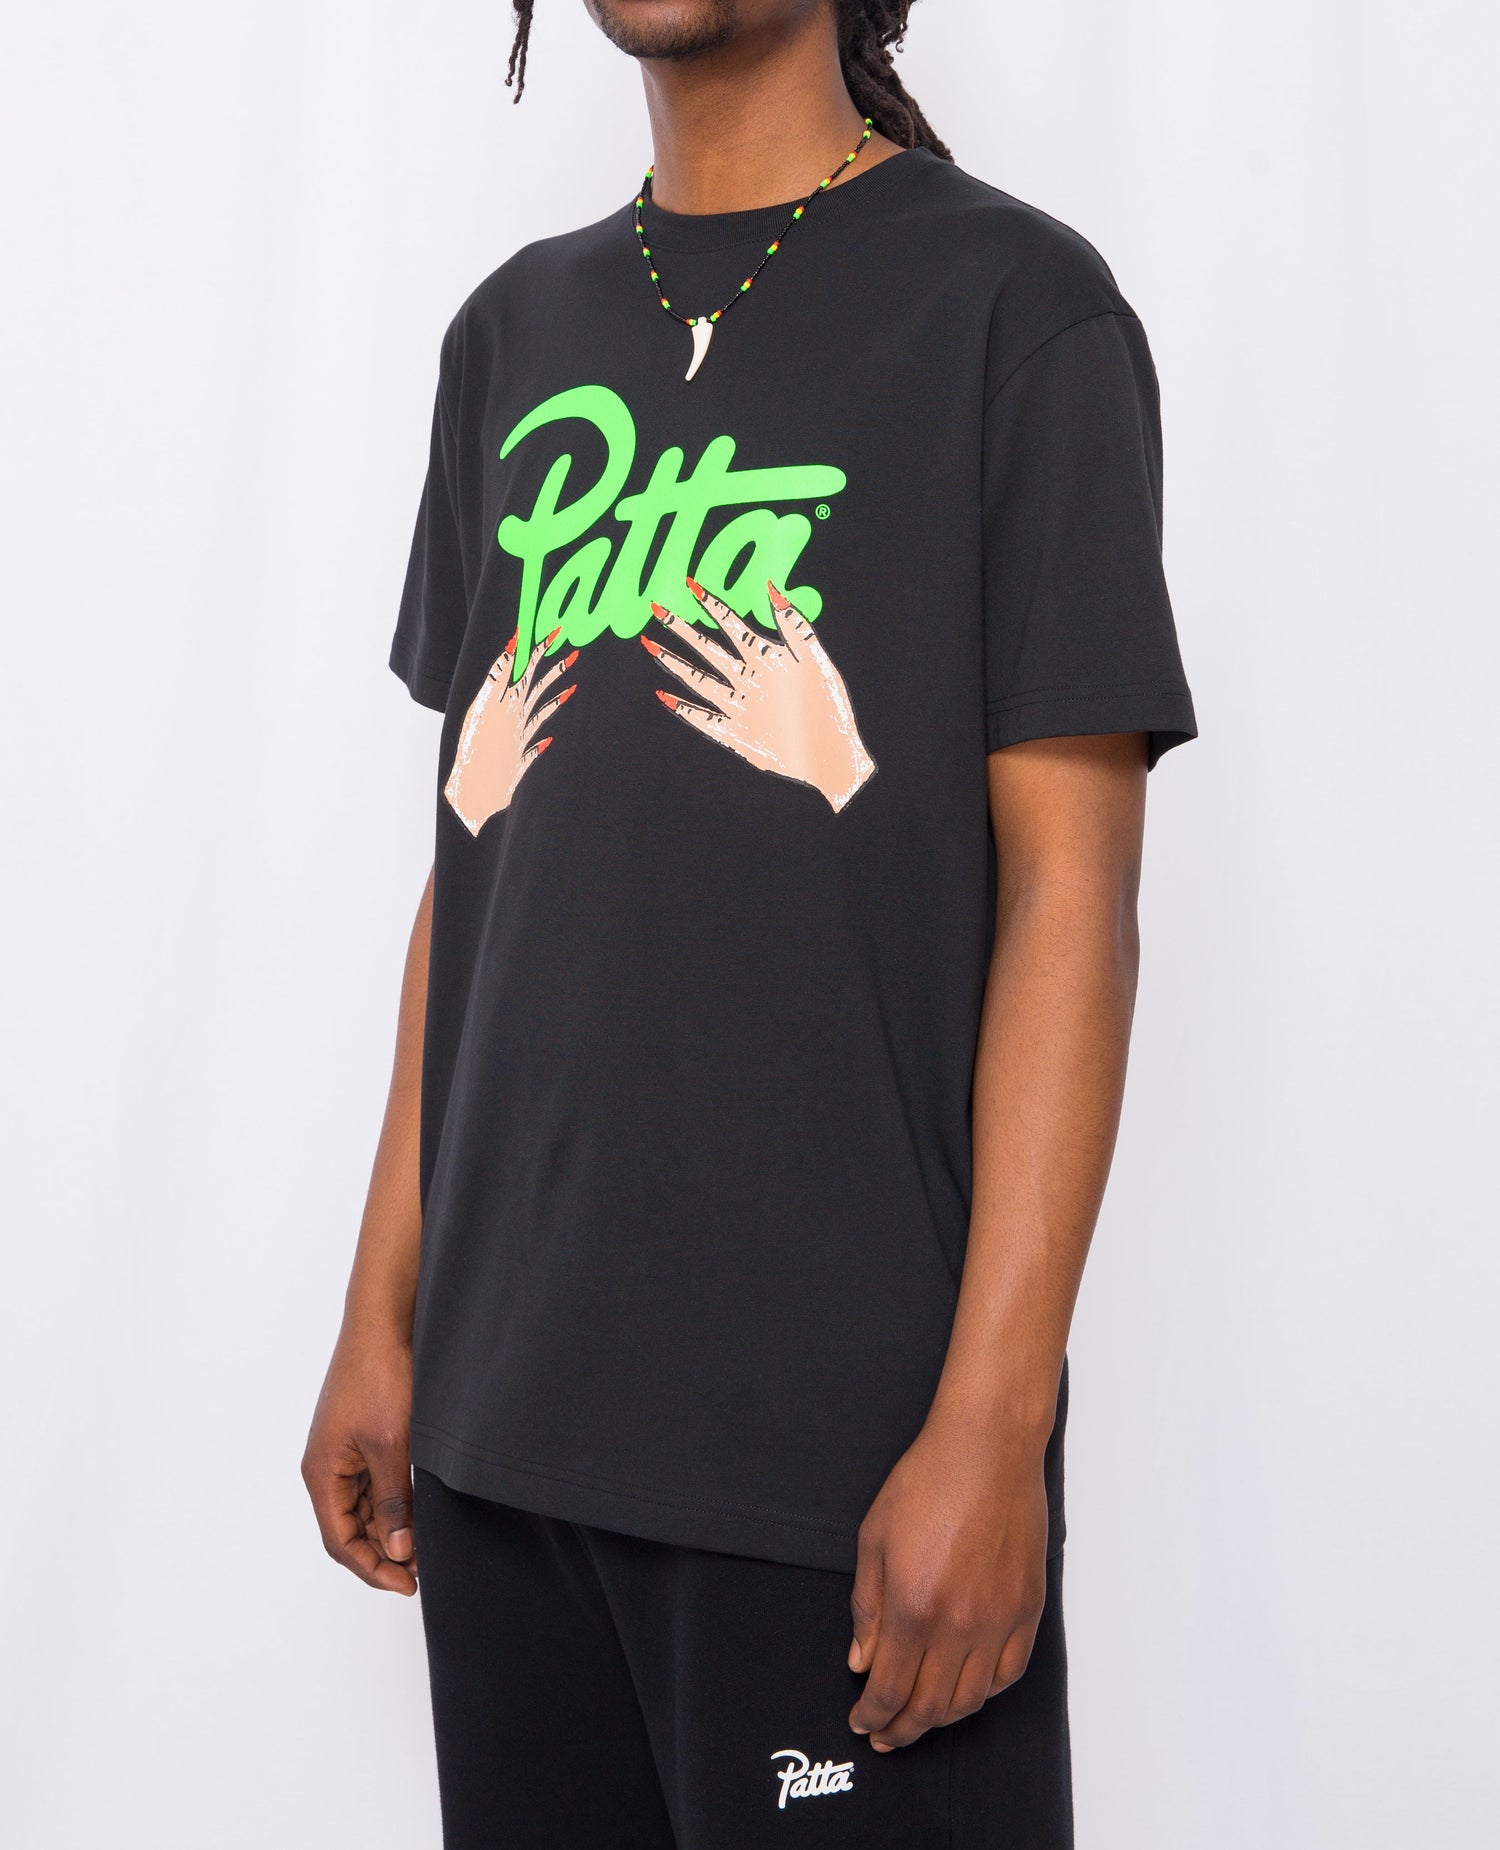 Patta Self Care Hands T-Shirt (Black)